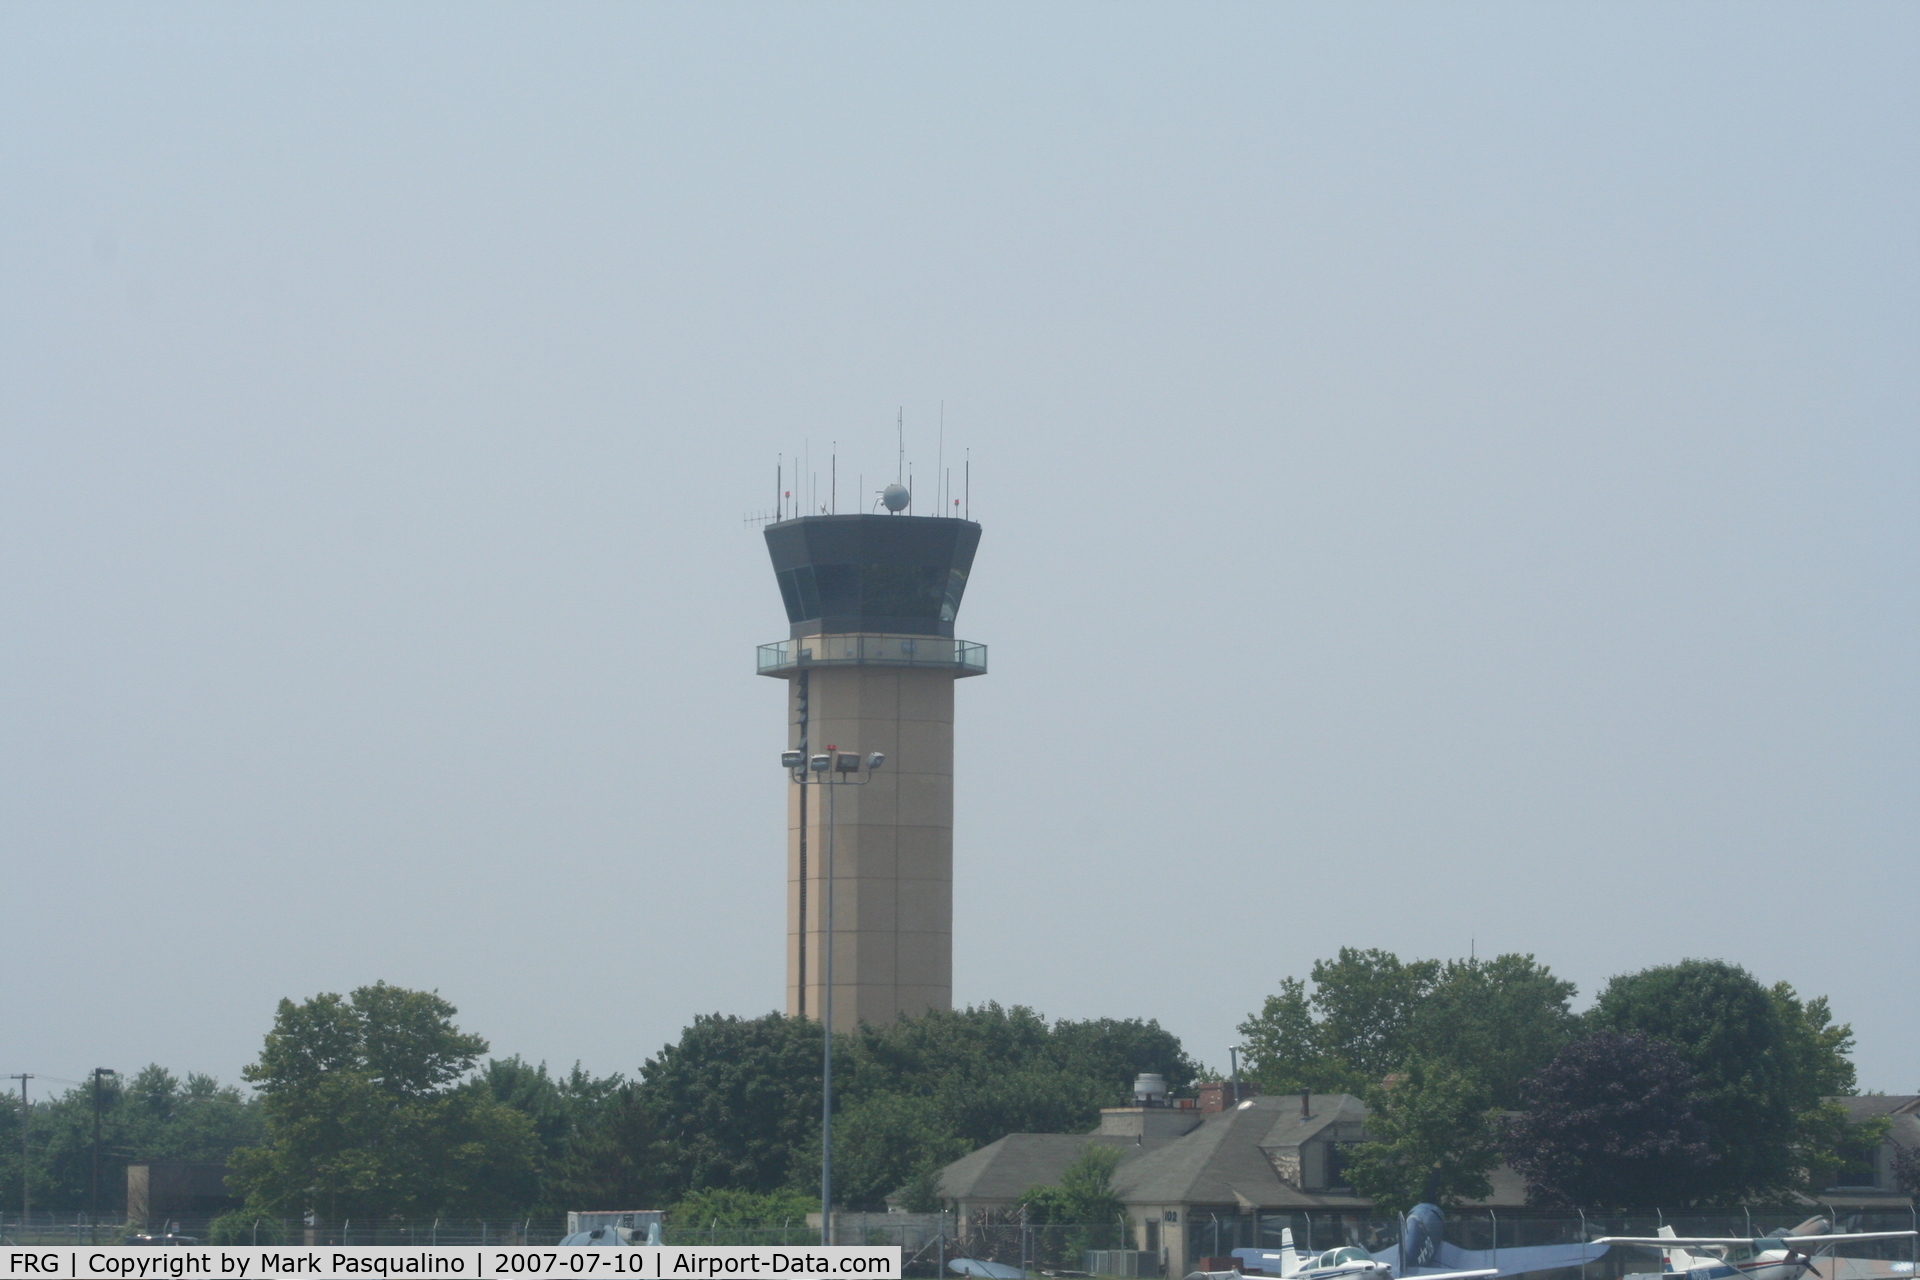 Republic Airport (FRG) - Control Tower